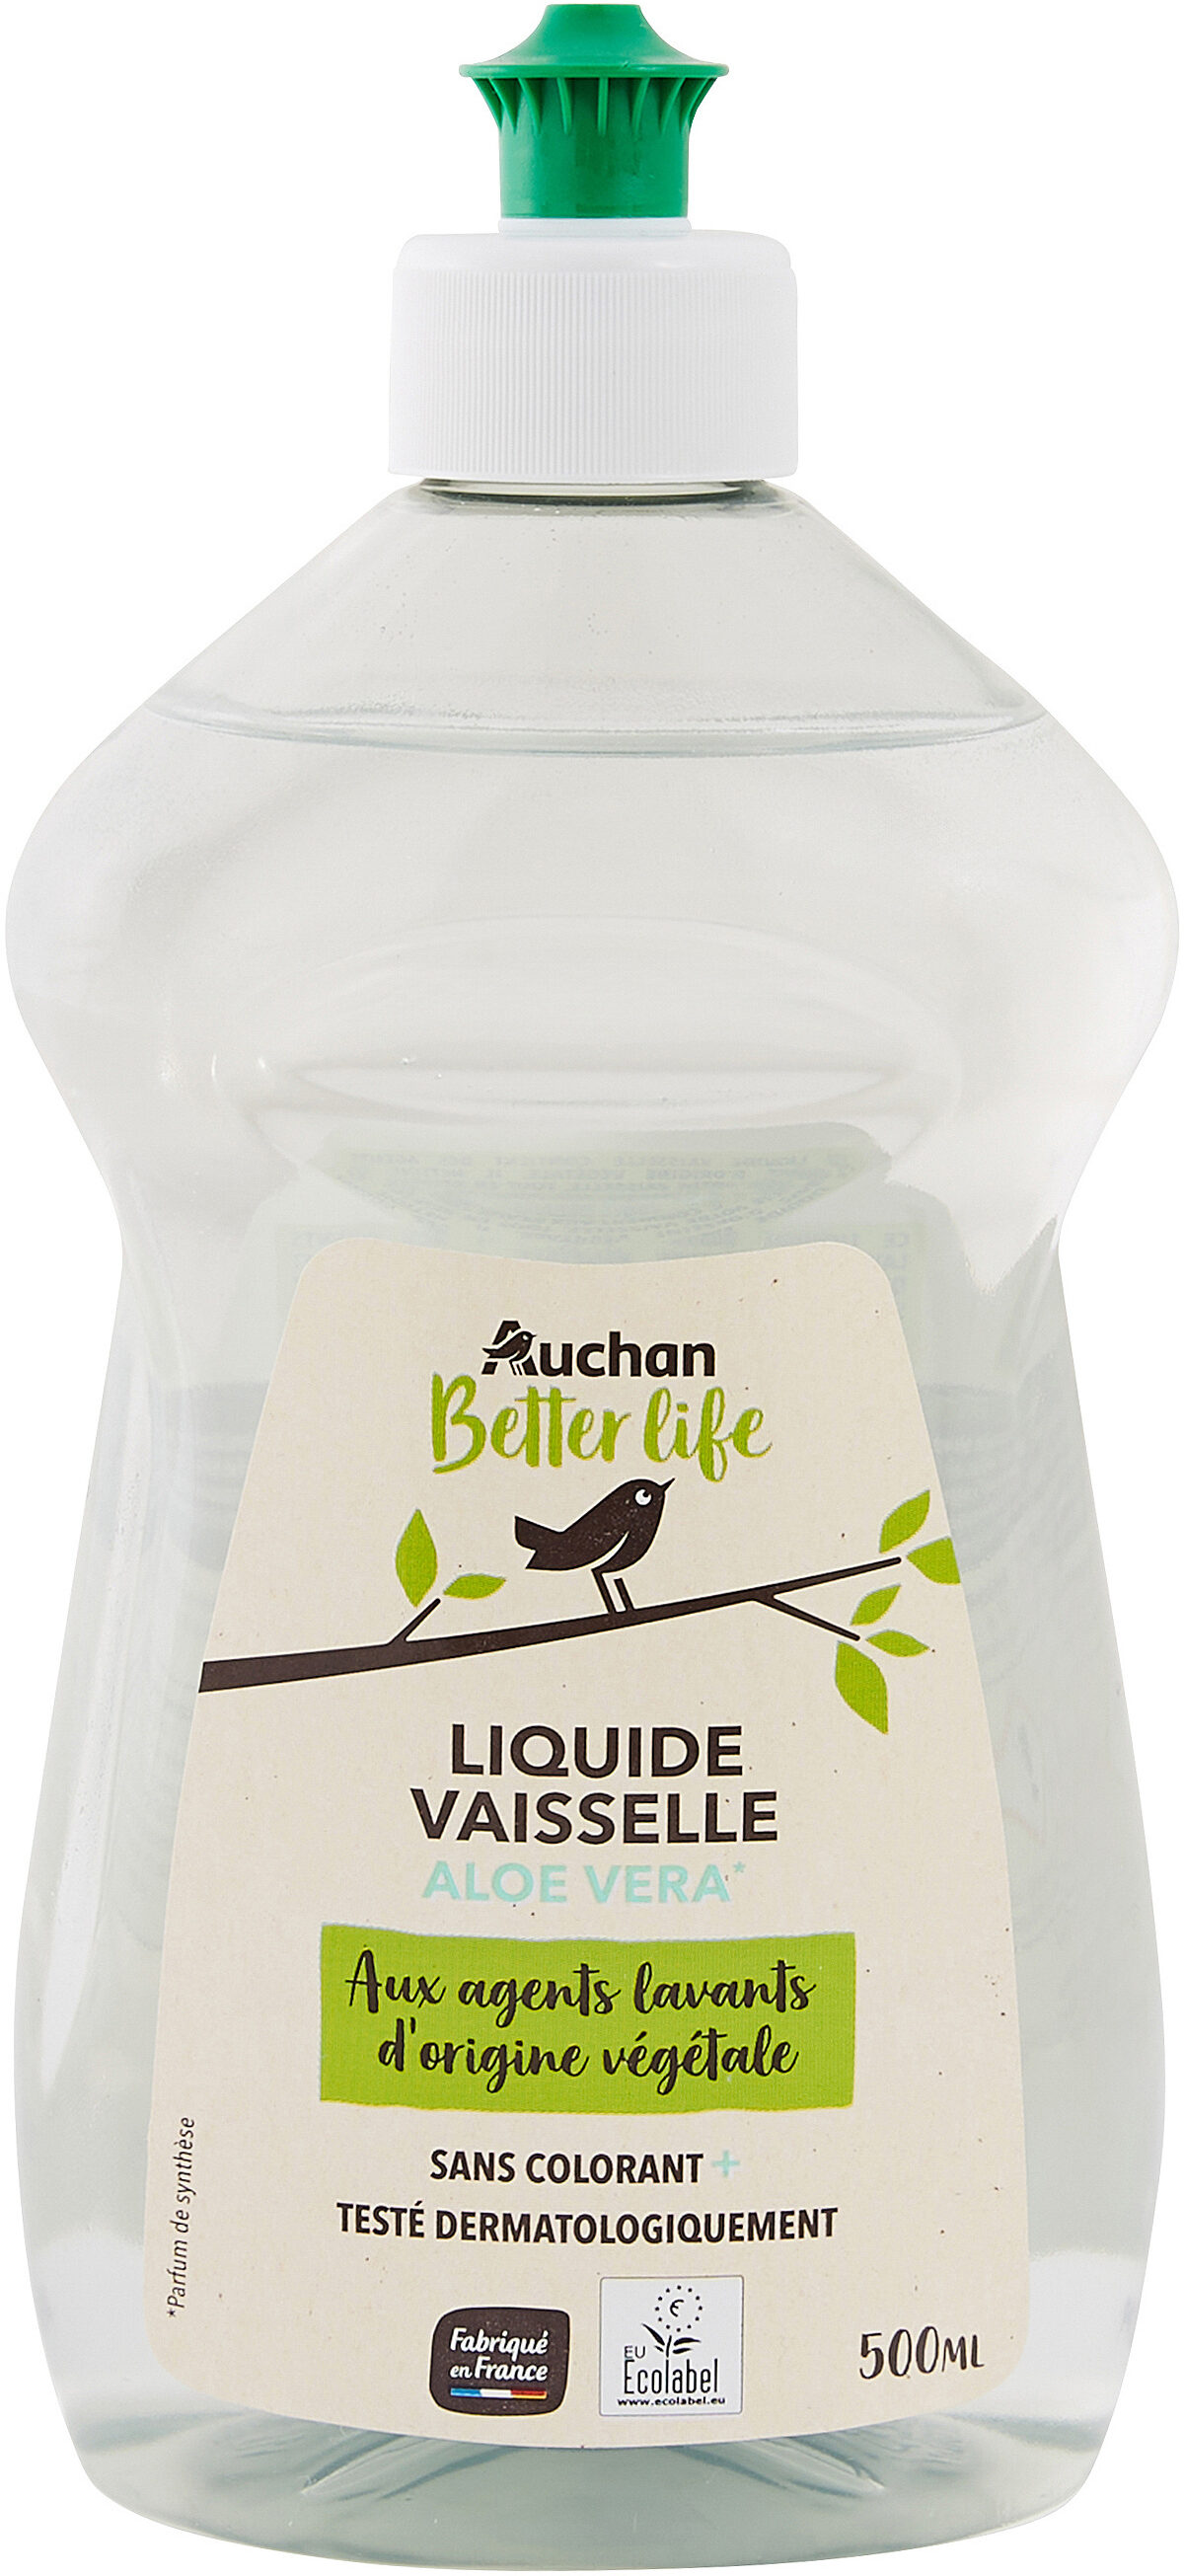 Liquide vaisselle - Aloe vera Ecolabel 500mL - Produit - fr